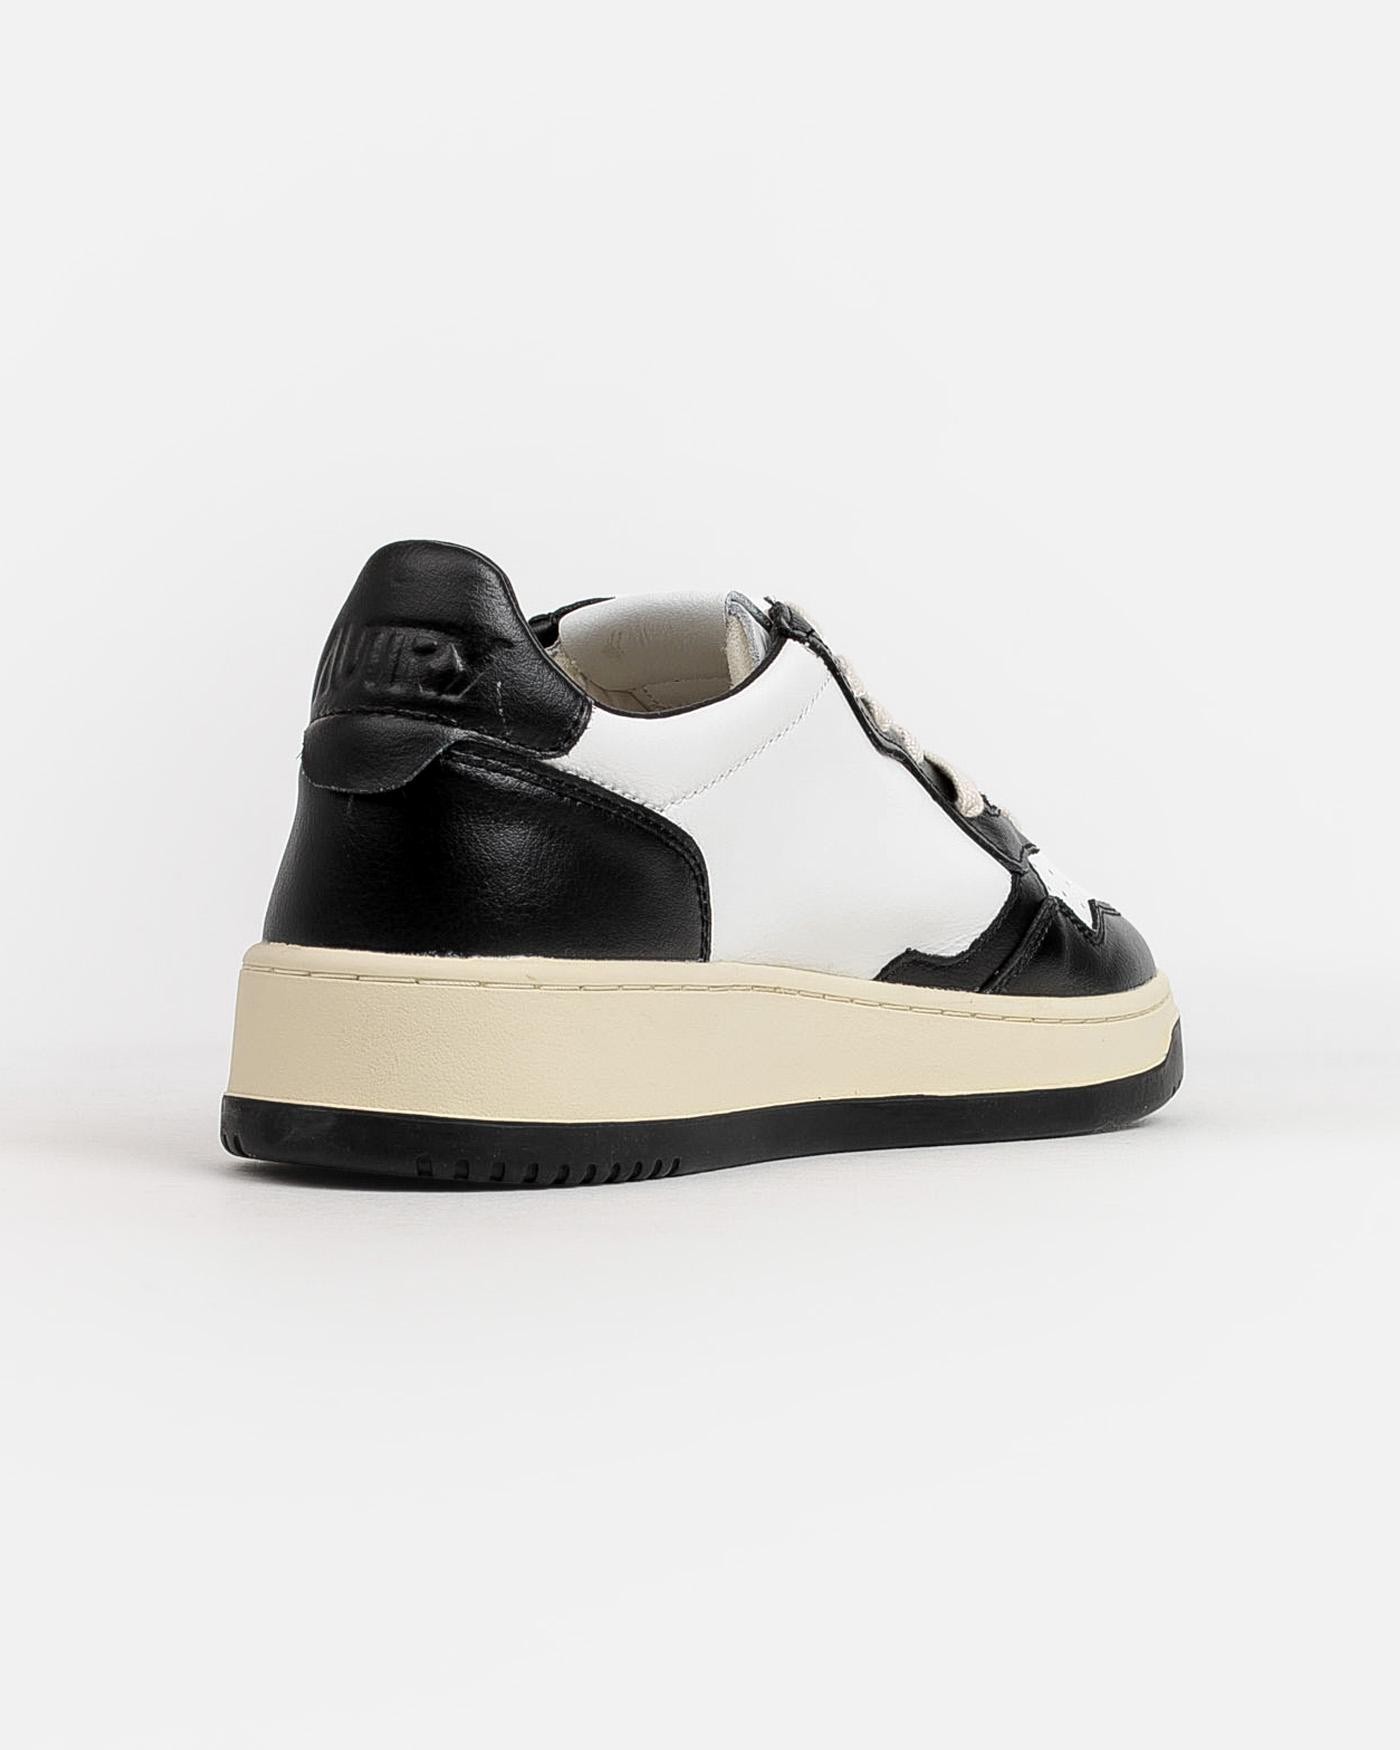 autry-zapatillas-aulm-wb01-sneakers-black-white-negras-2